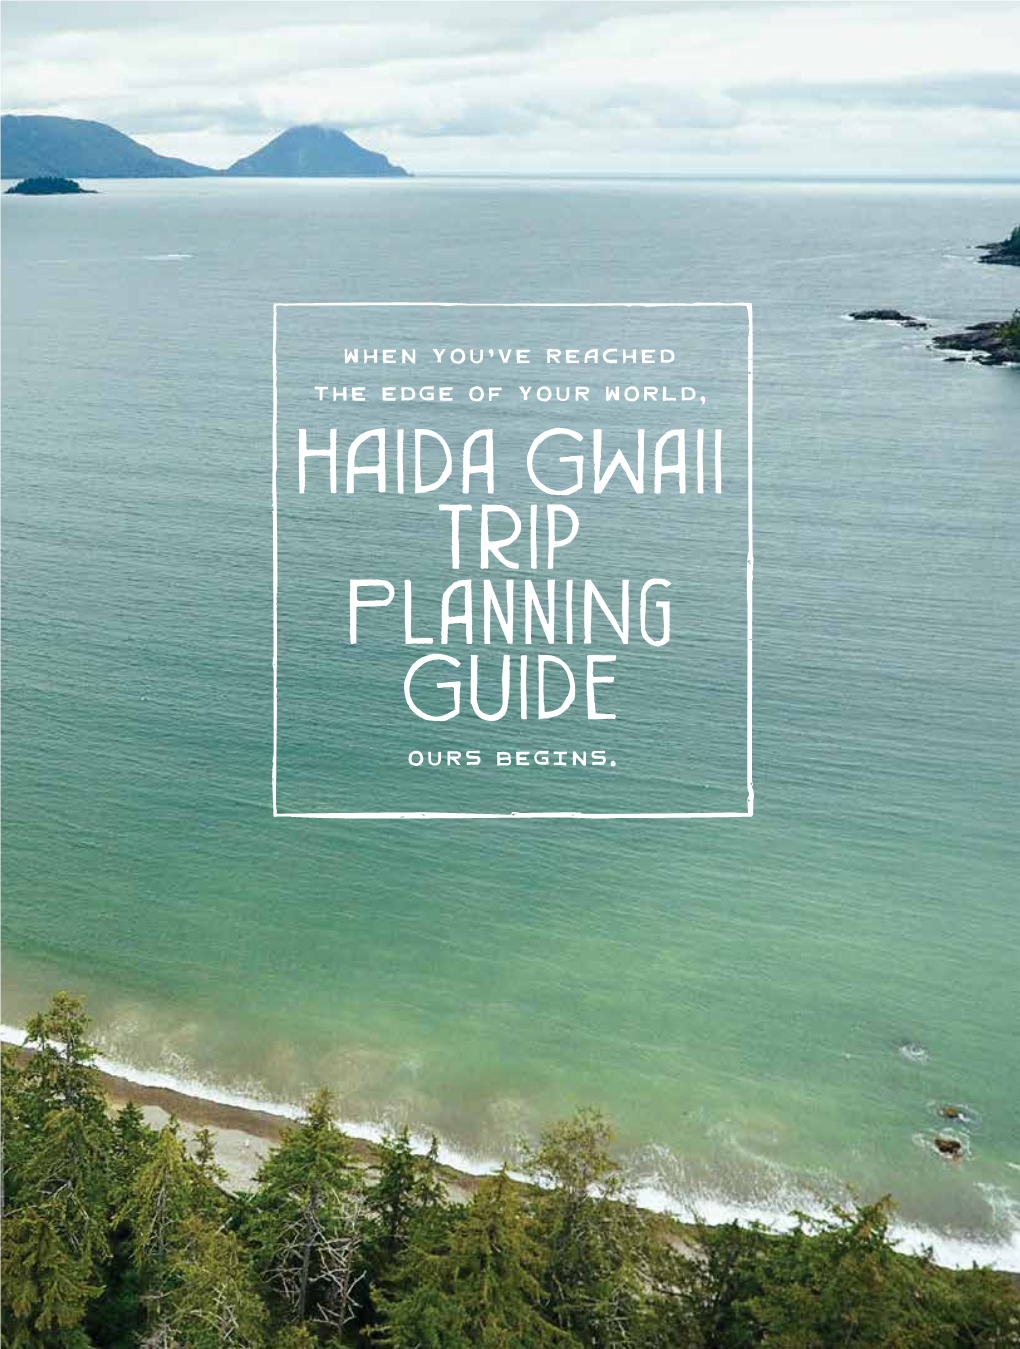 Haida Gwaii Trip Planning Guide OURS BEGINS